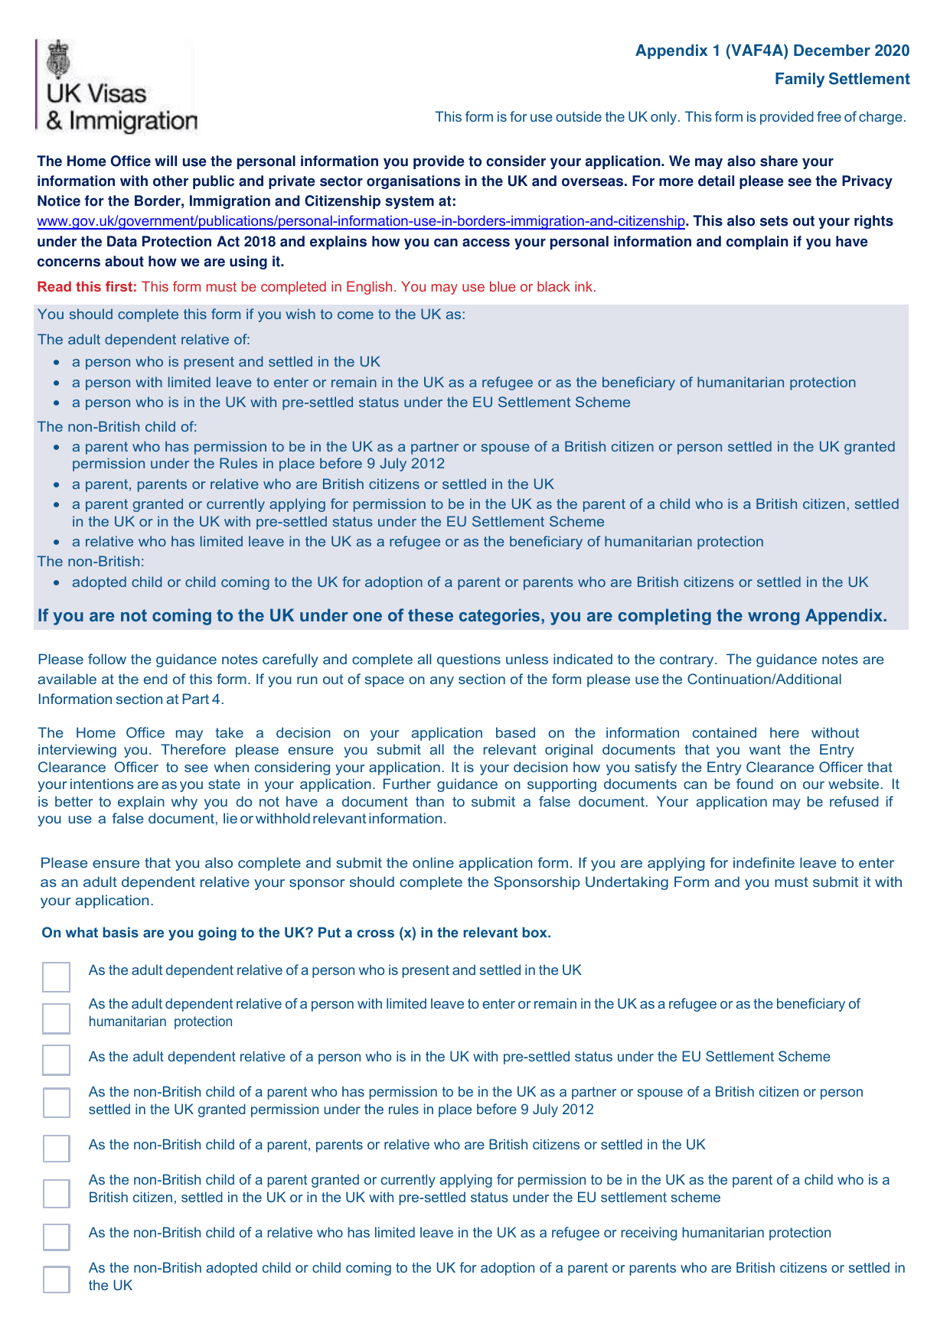 Form VAF4A Appendix 1 Family Settlement - United Kingdom, Page 1